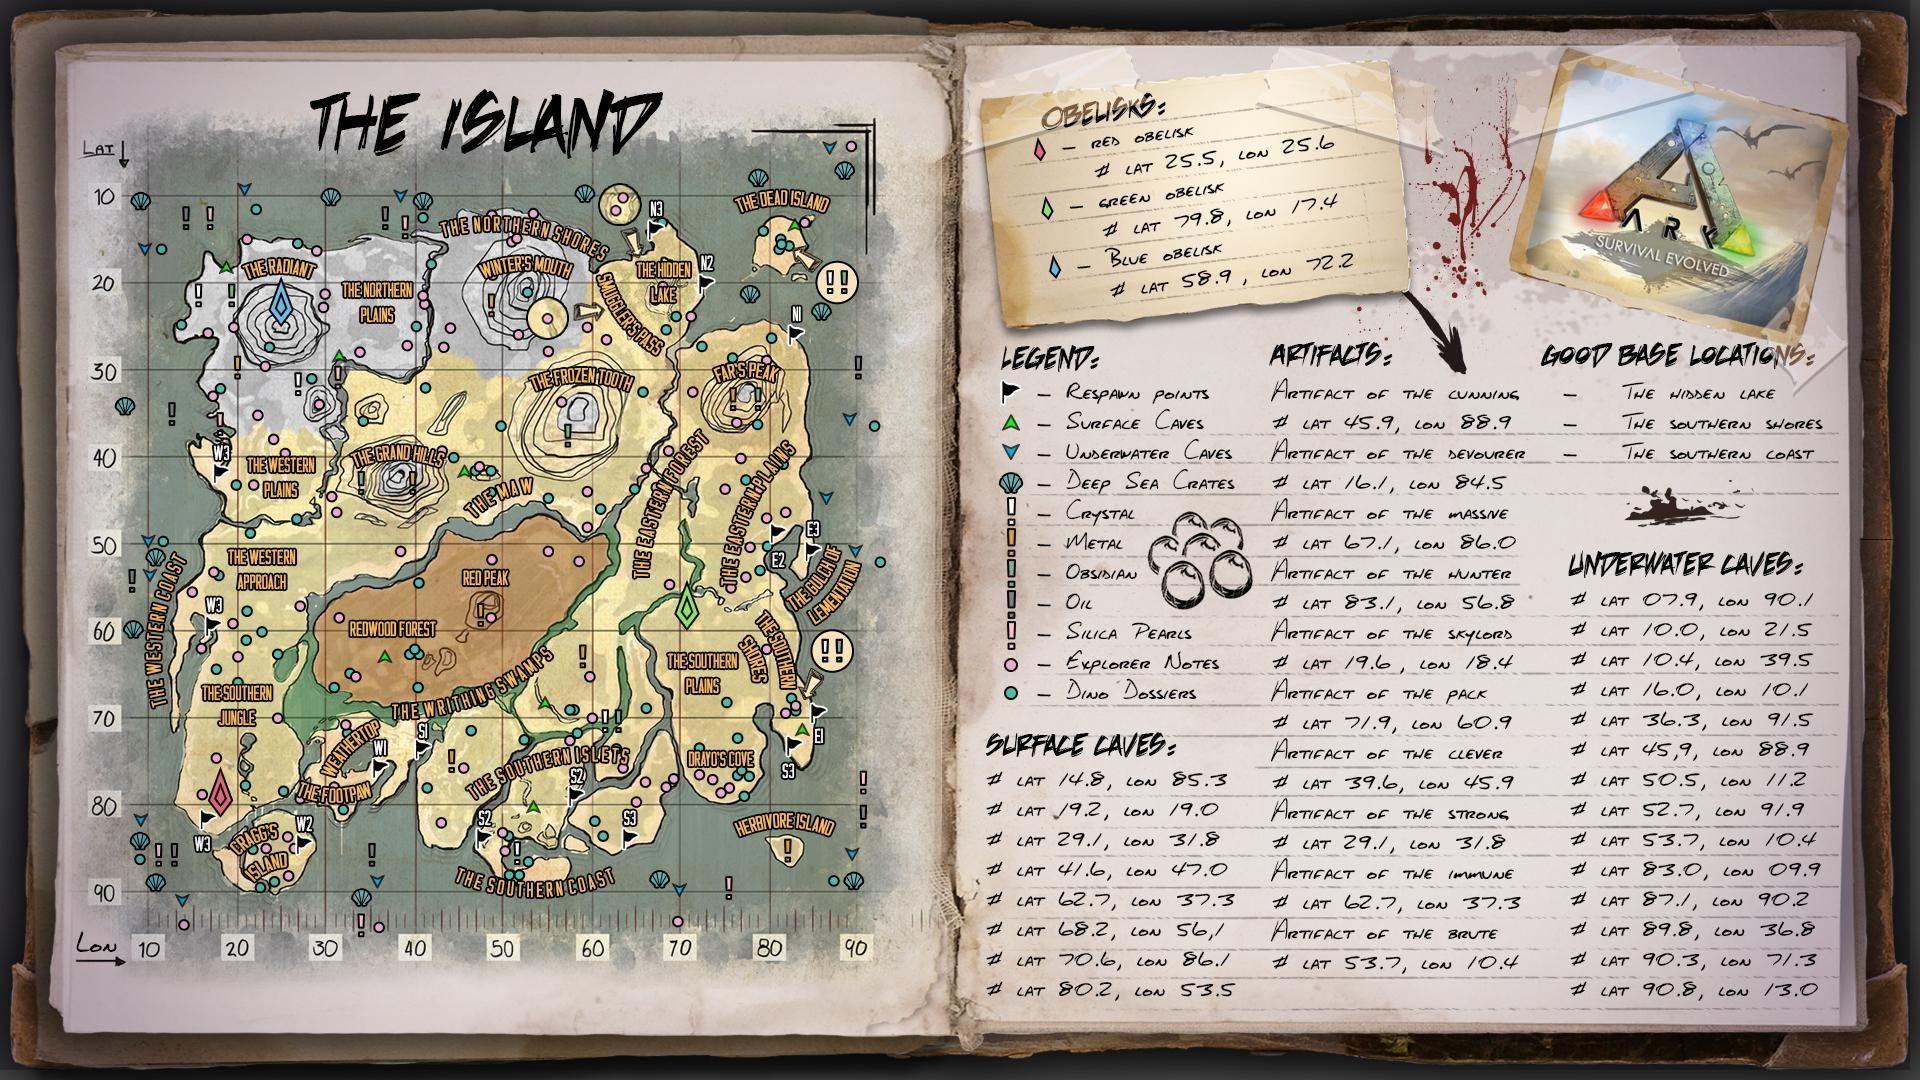 ark survival evolved resource map